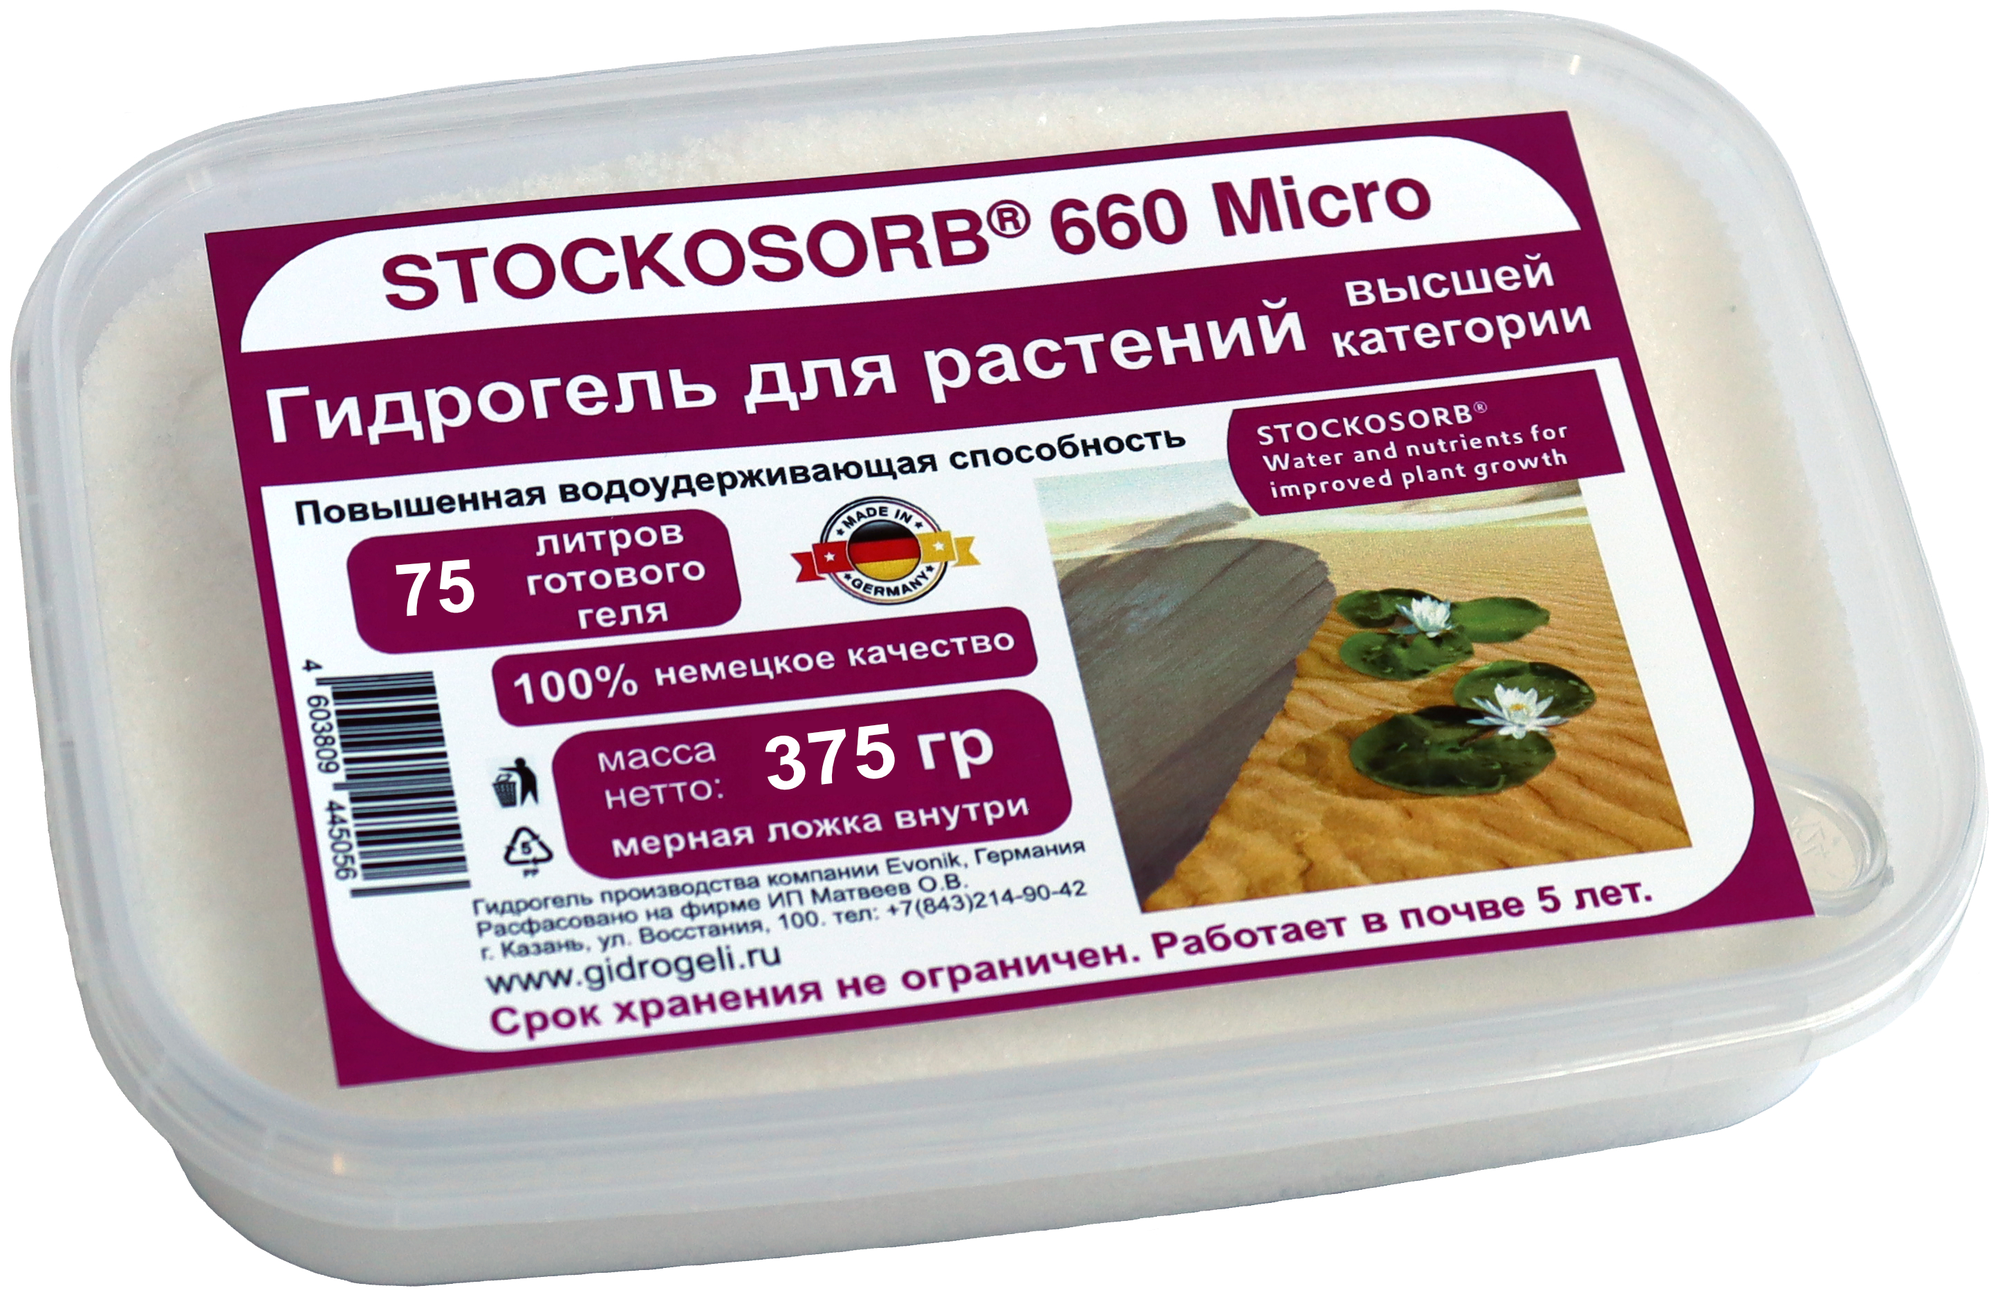 Гидрогель Stockosorb 660 Micro Вес 375 гр. Германия. - фотография № 1